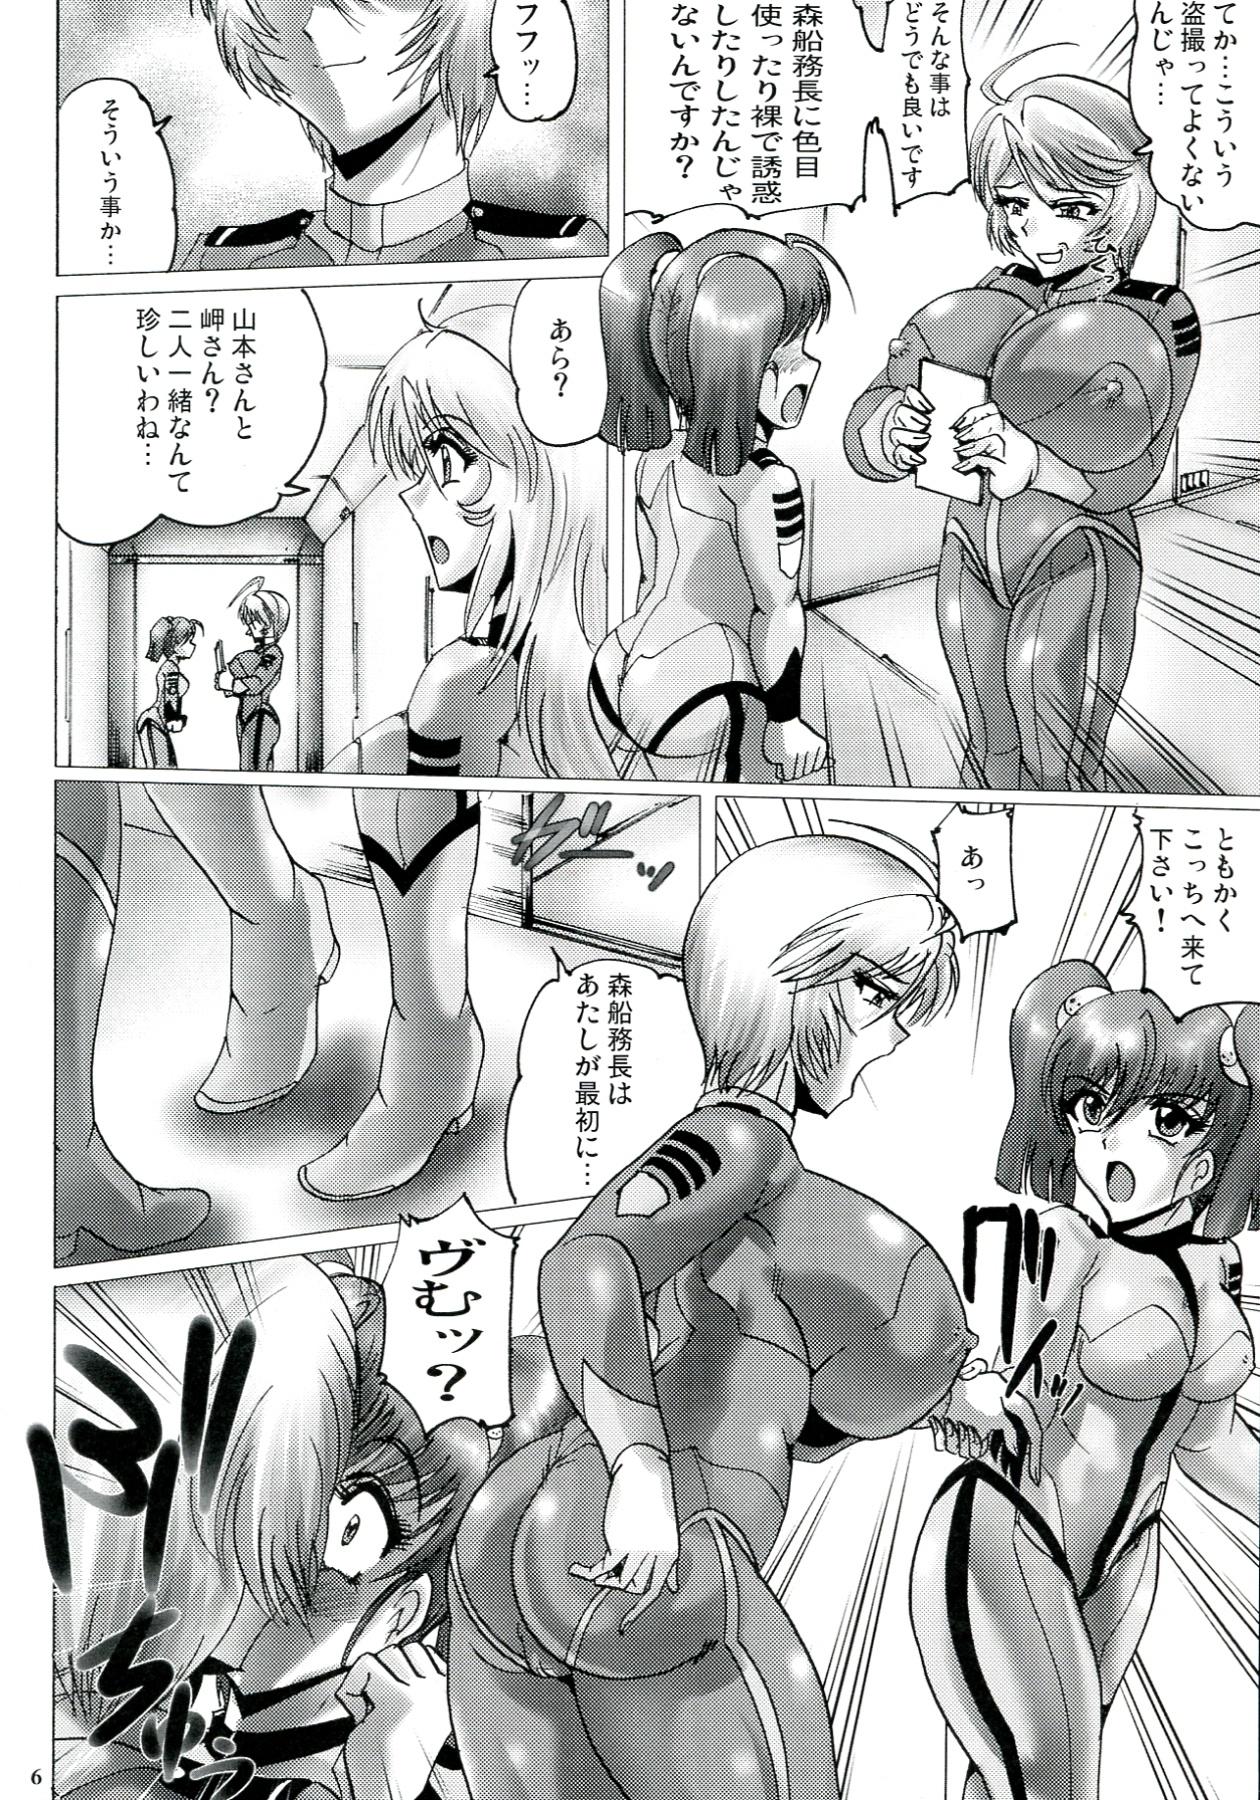 Mulher Muchuu Senkan 2 Sayounara Watashi Konnichiwa Anata - Space battleship yamato Piercing - Page 6